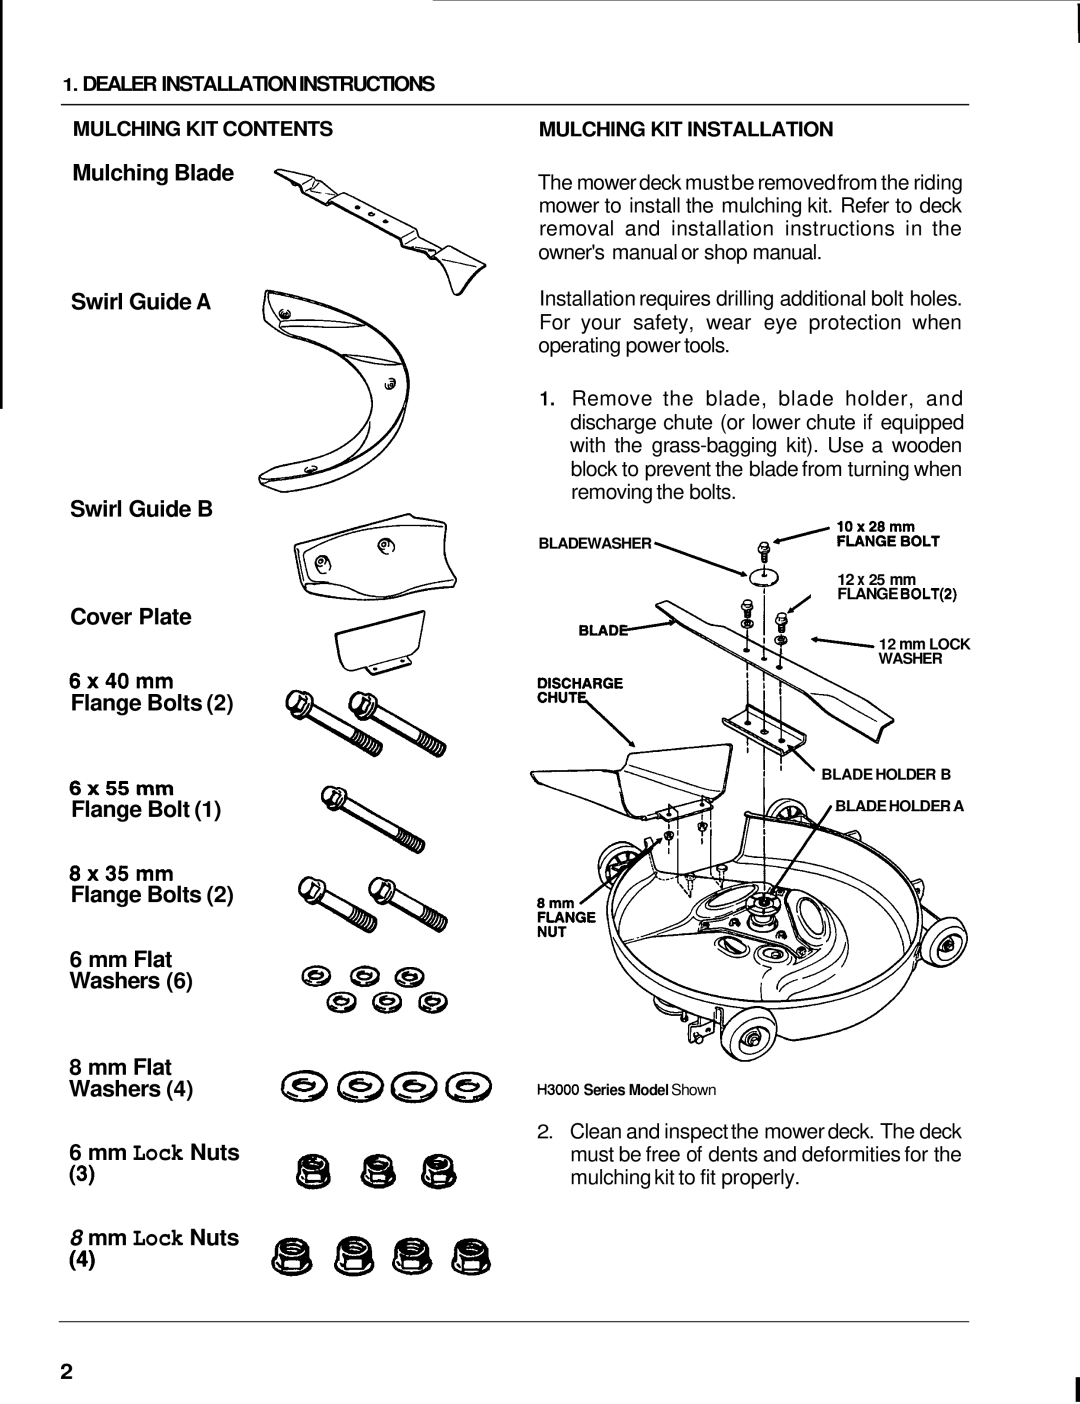 Honda Power Equipment H1000, H3000 manual Mulching Blade, Swirl Guide A Swirl Guide B Cover Plate, Flange Bolts, 6 x 4 0 m m 